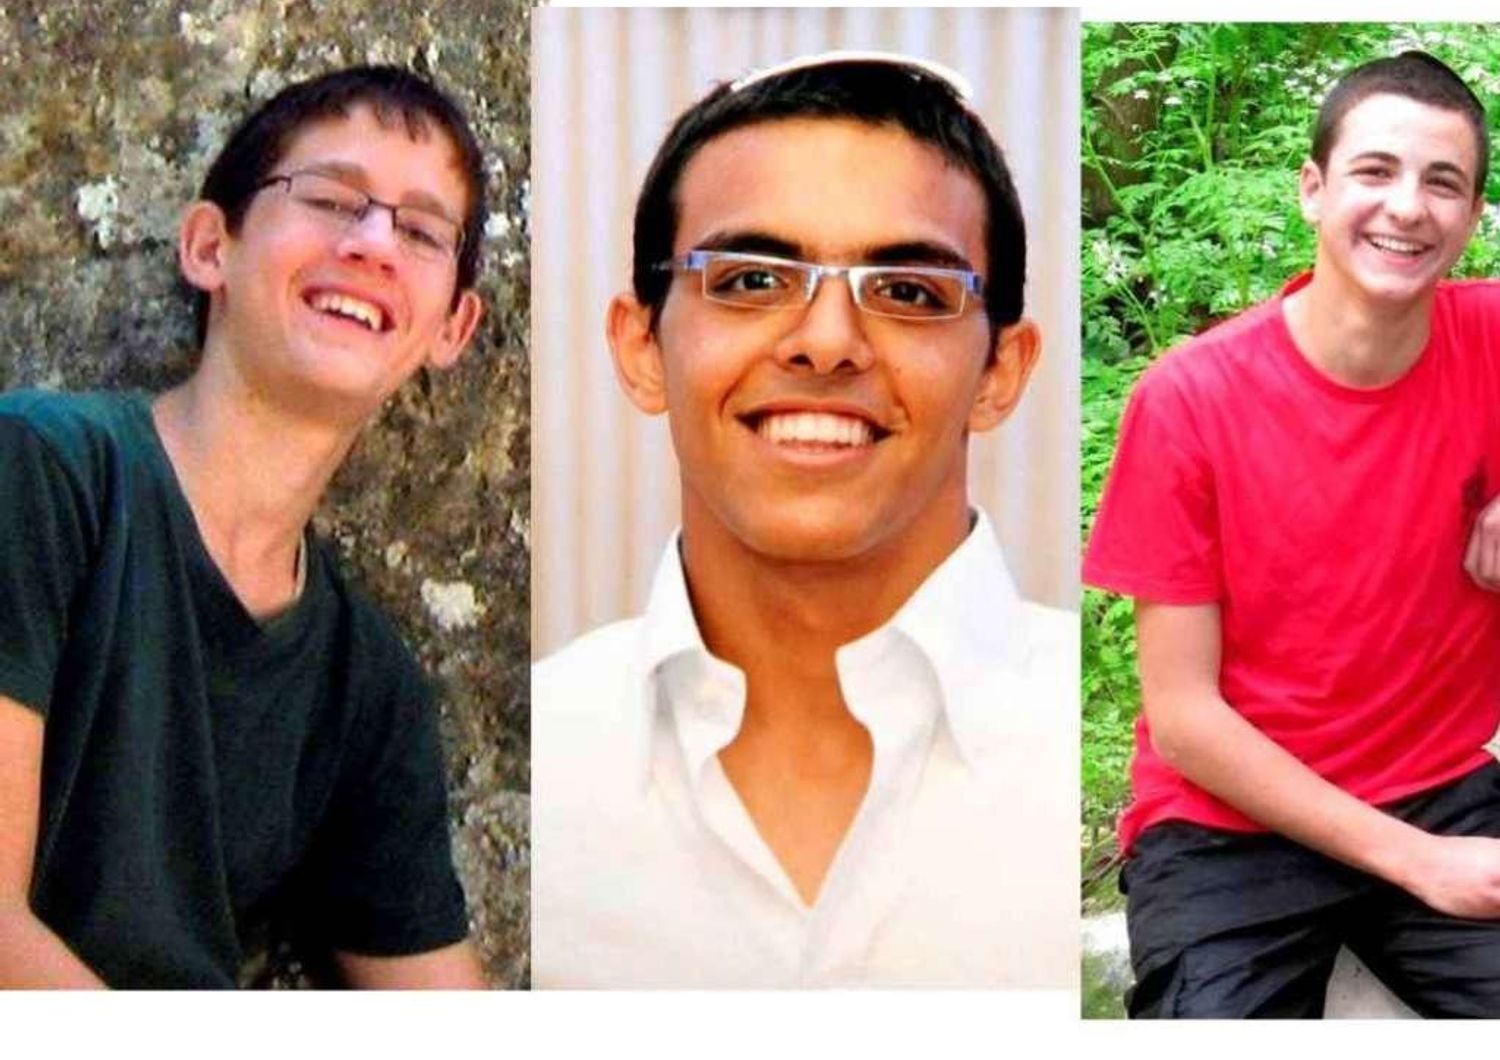 Uccisi i tre ragazzi israeliani. Netanyahu "Hamas paghera'"